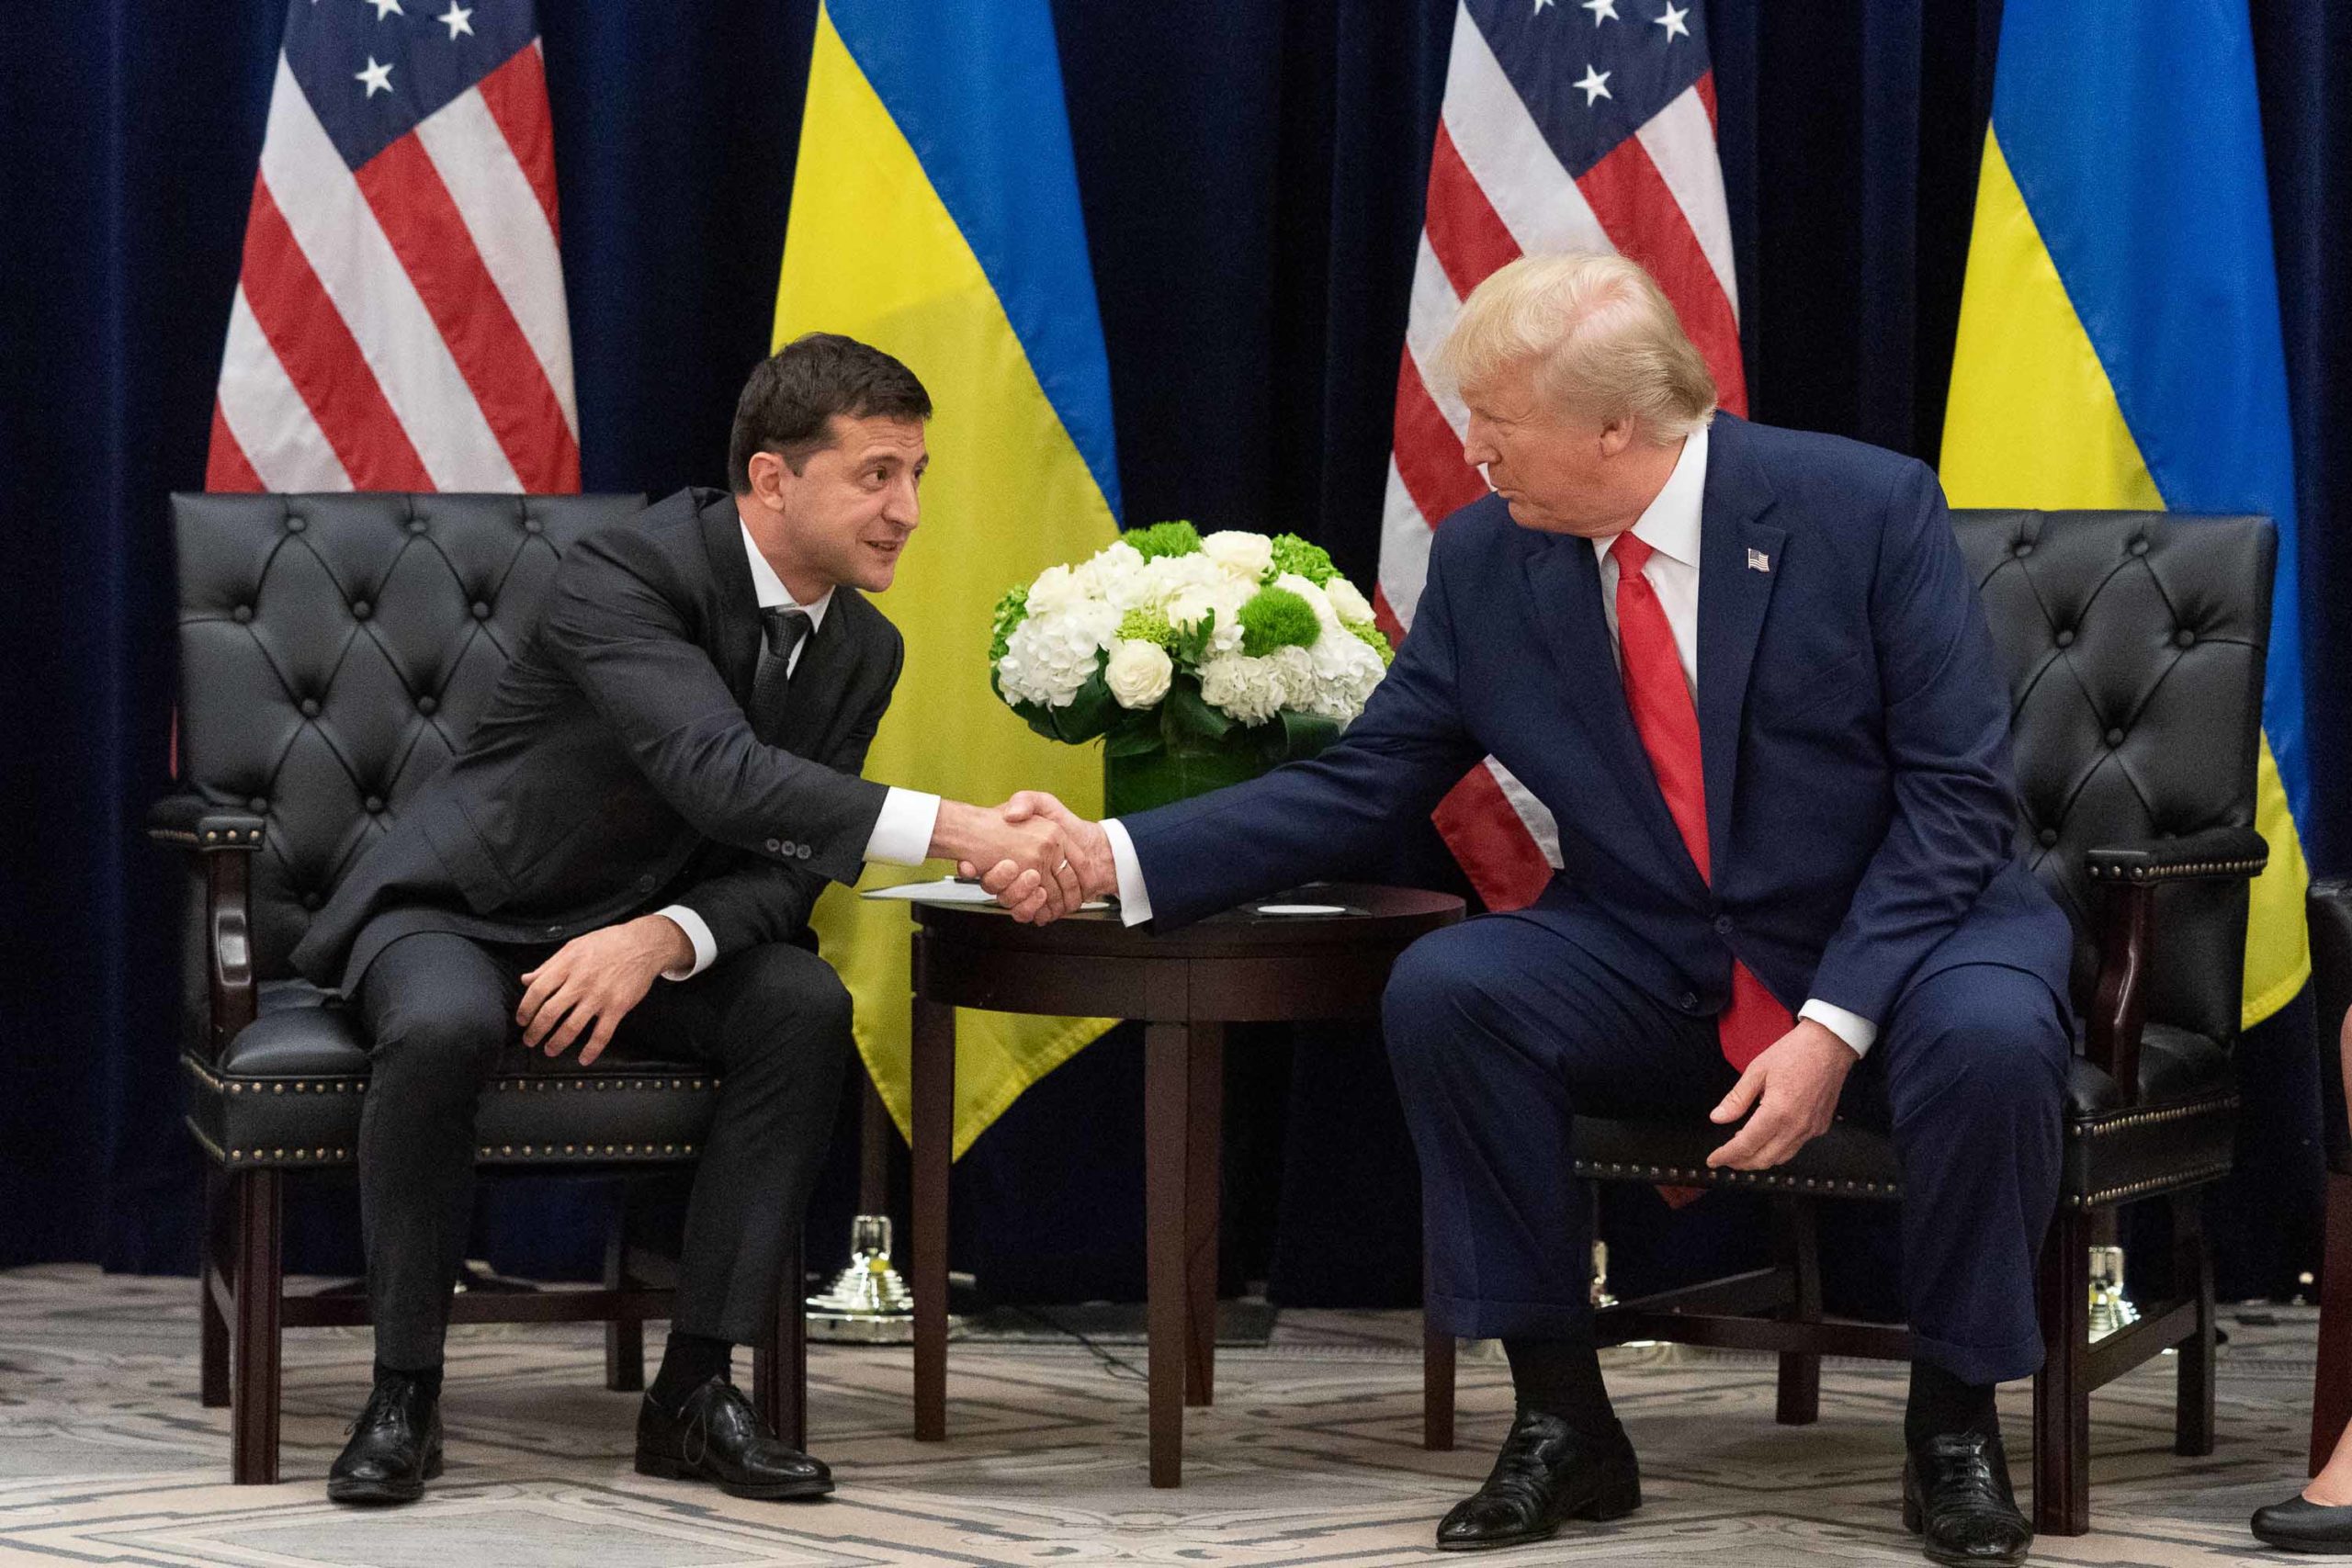 Volodymyr Zelensky and Donald Trump shaking hands